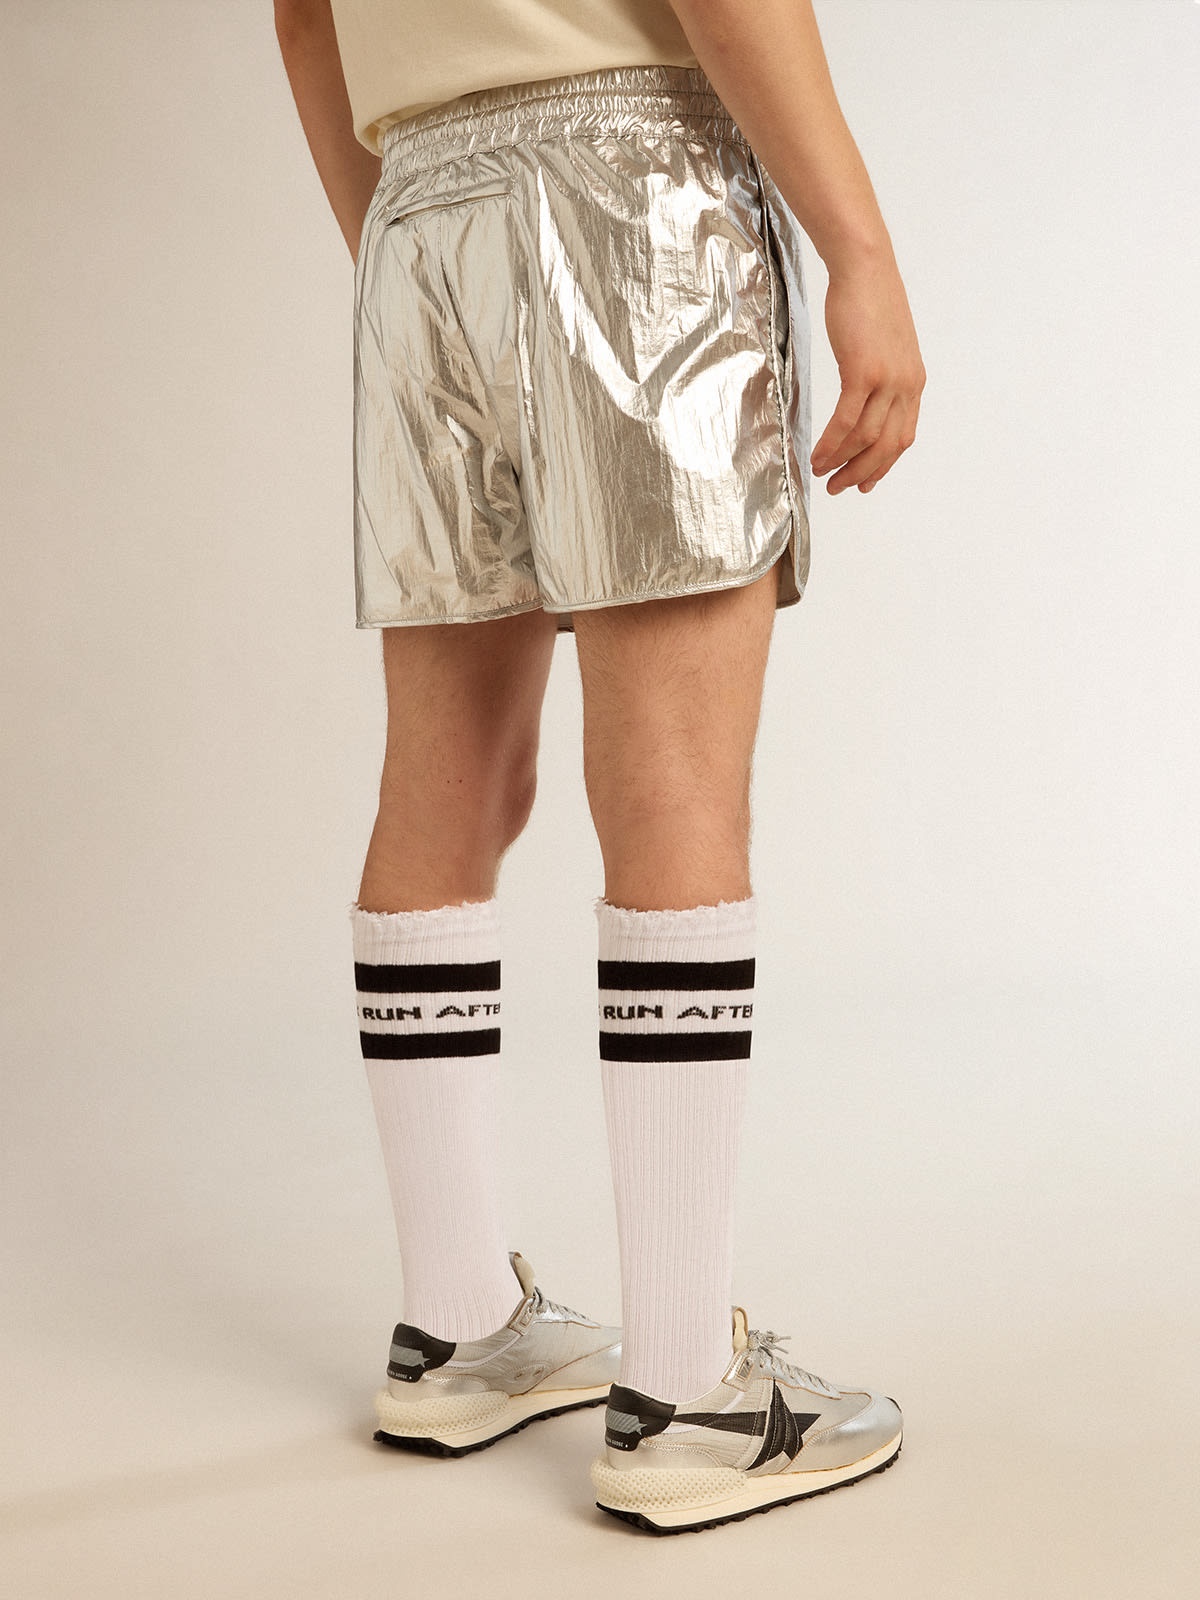 Men's running shorts in silver fabric - 4